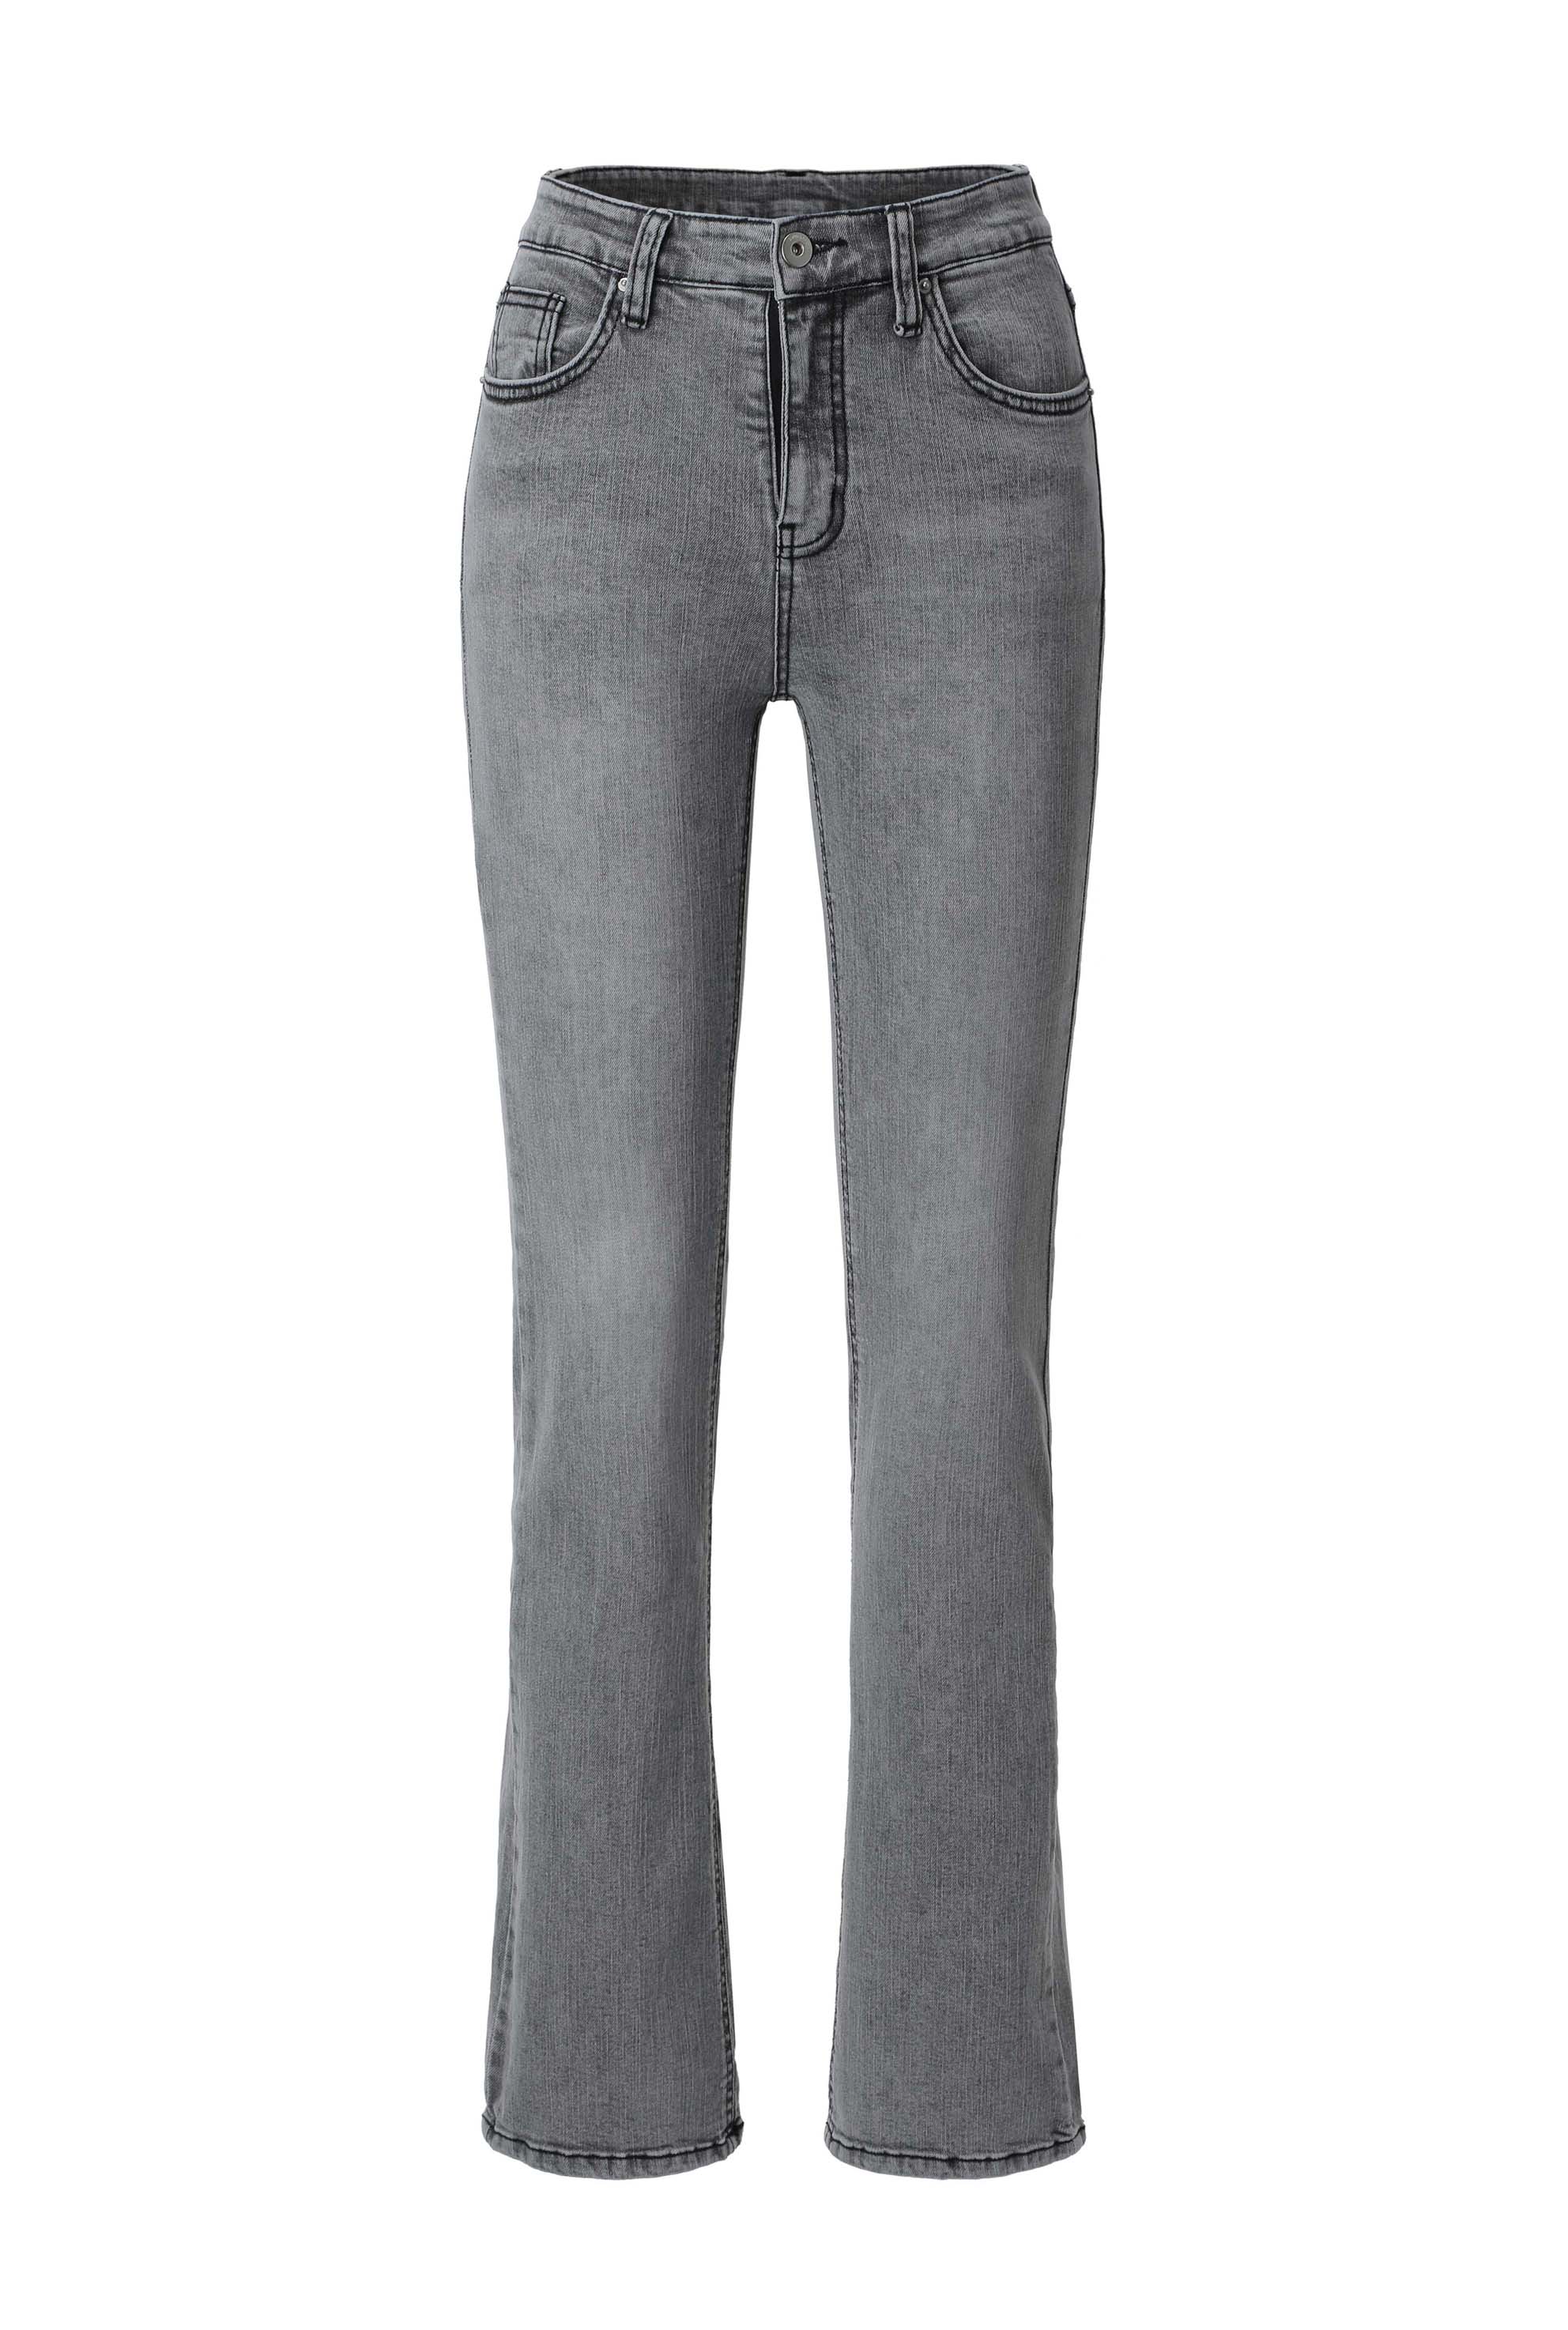 5502 Bootcut grey jeans